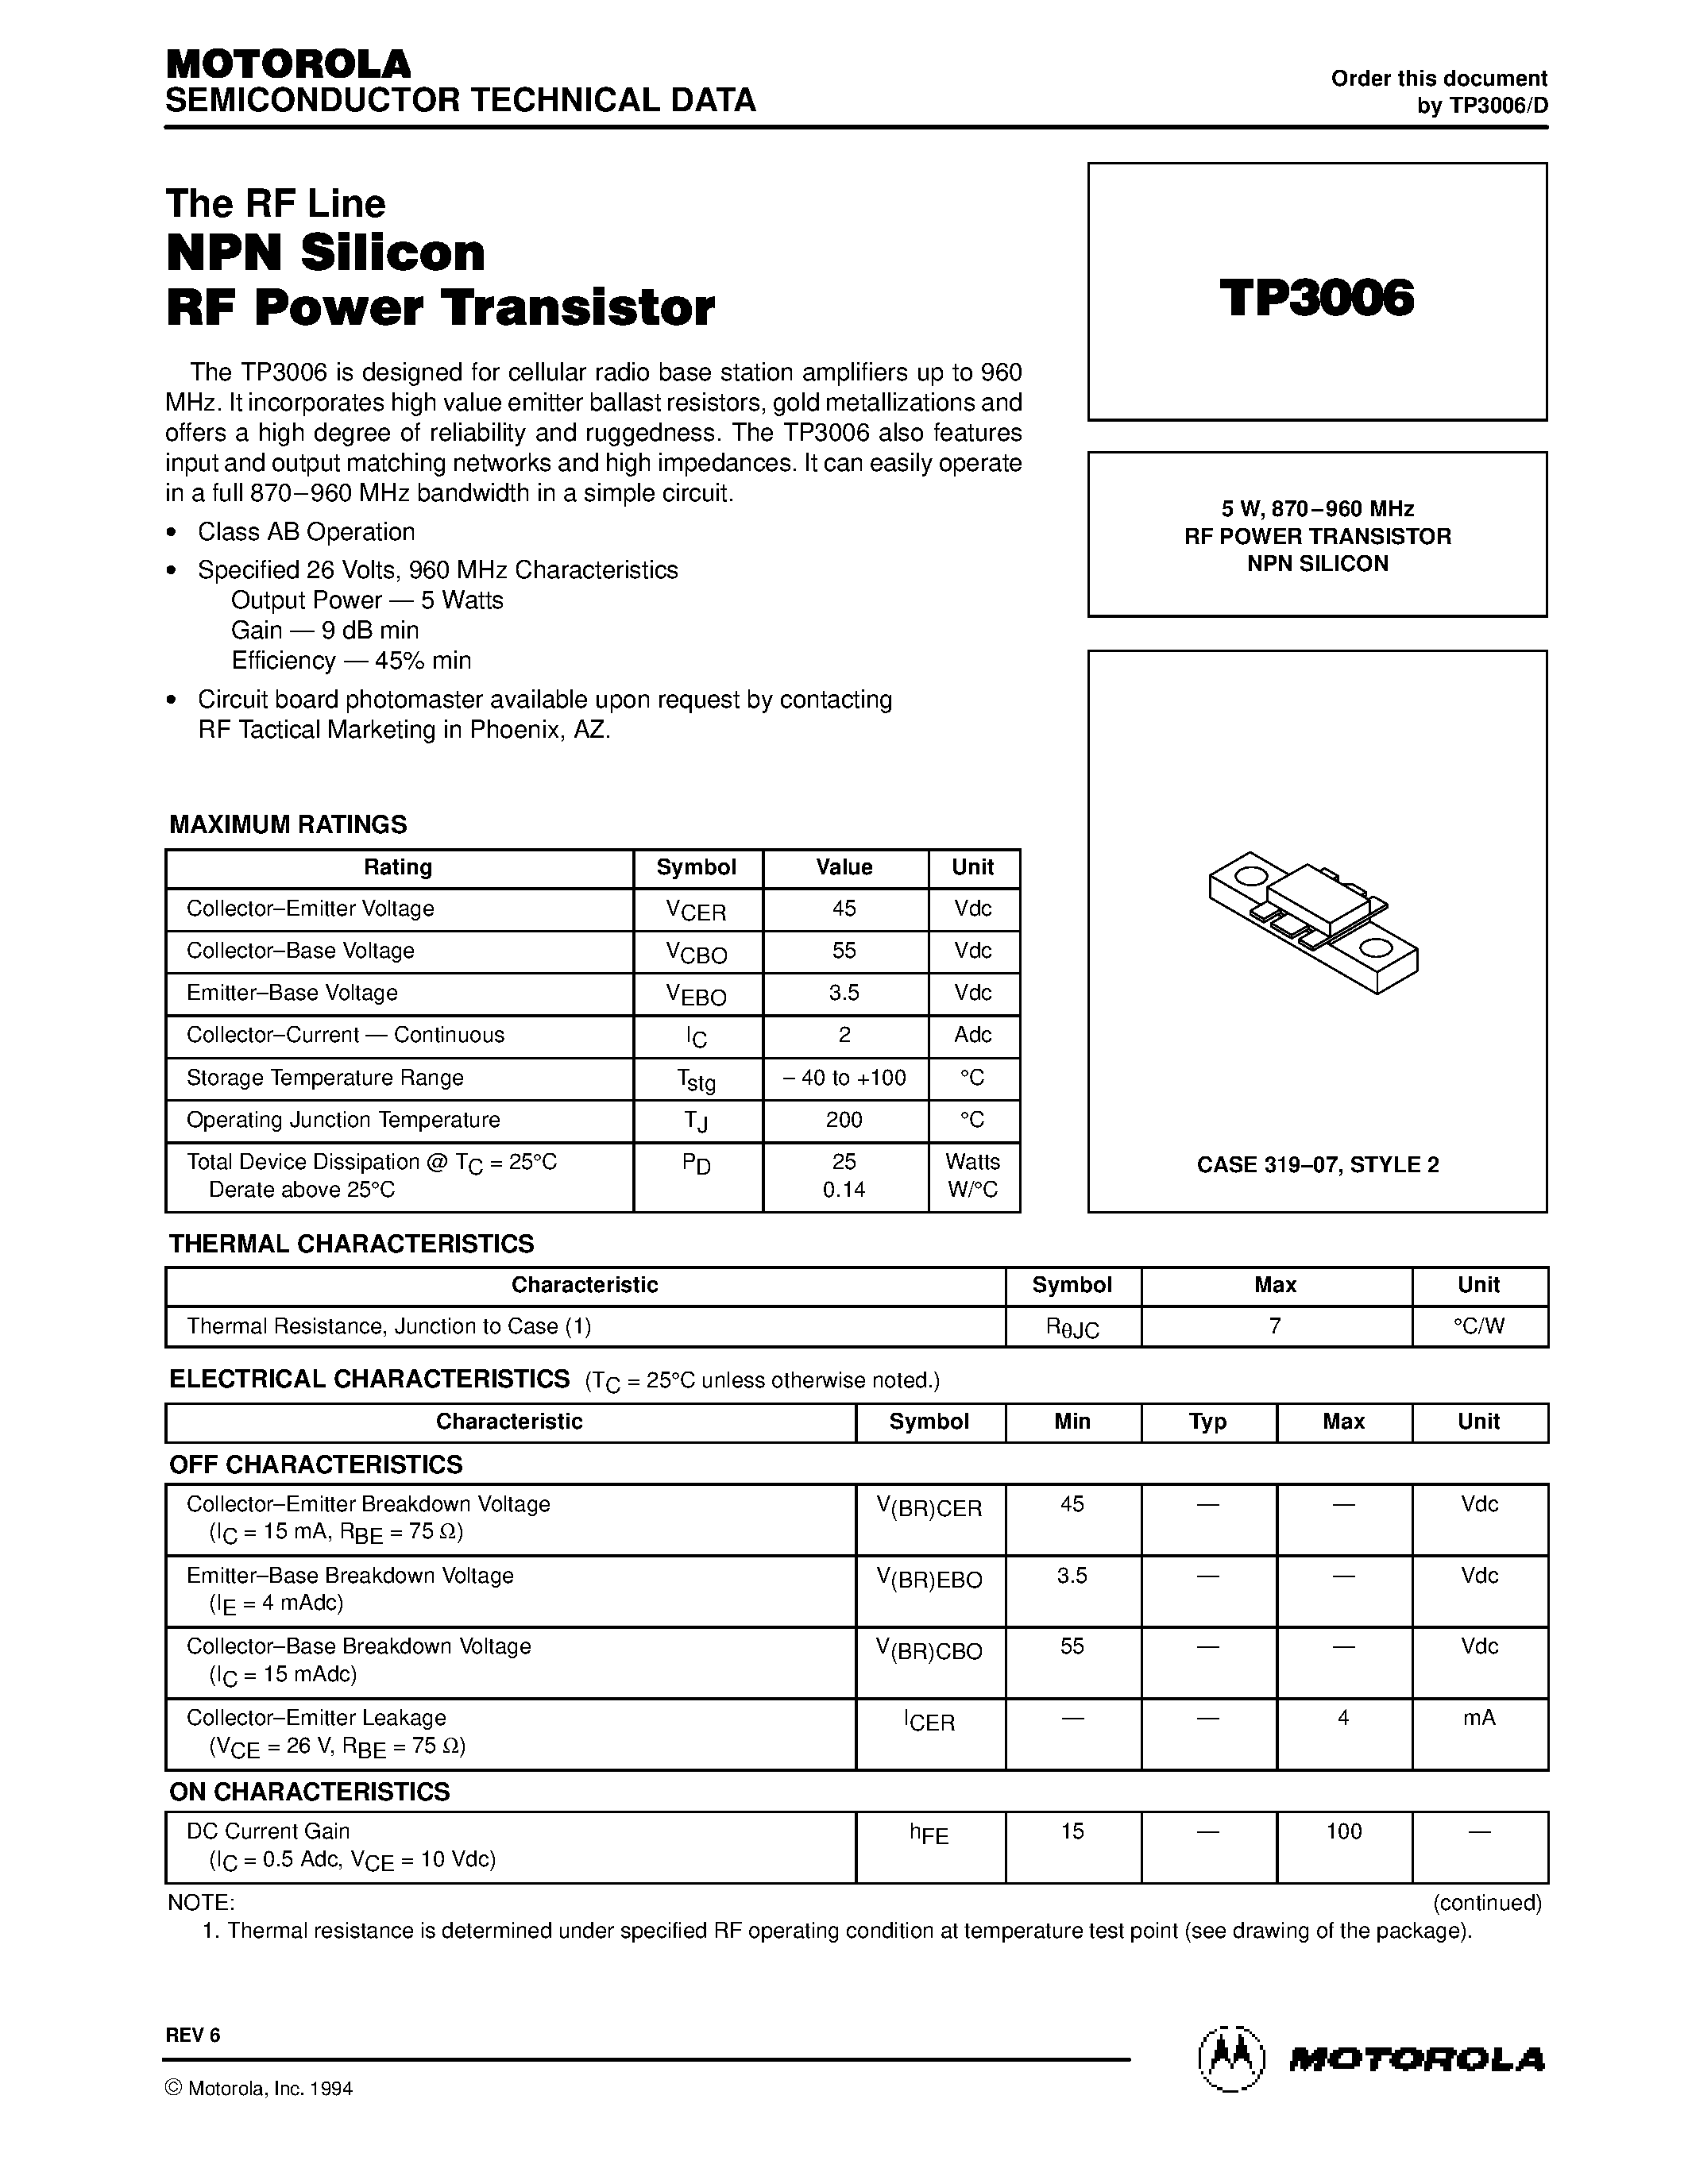 Даташит TP3006 - RF POWER TRANSISTOR NPN SILICON страница 1